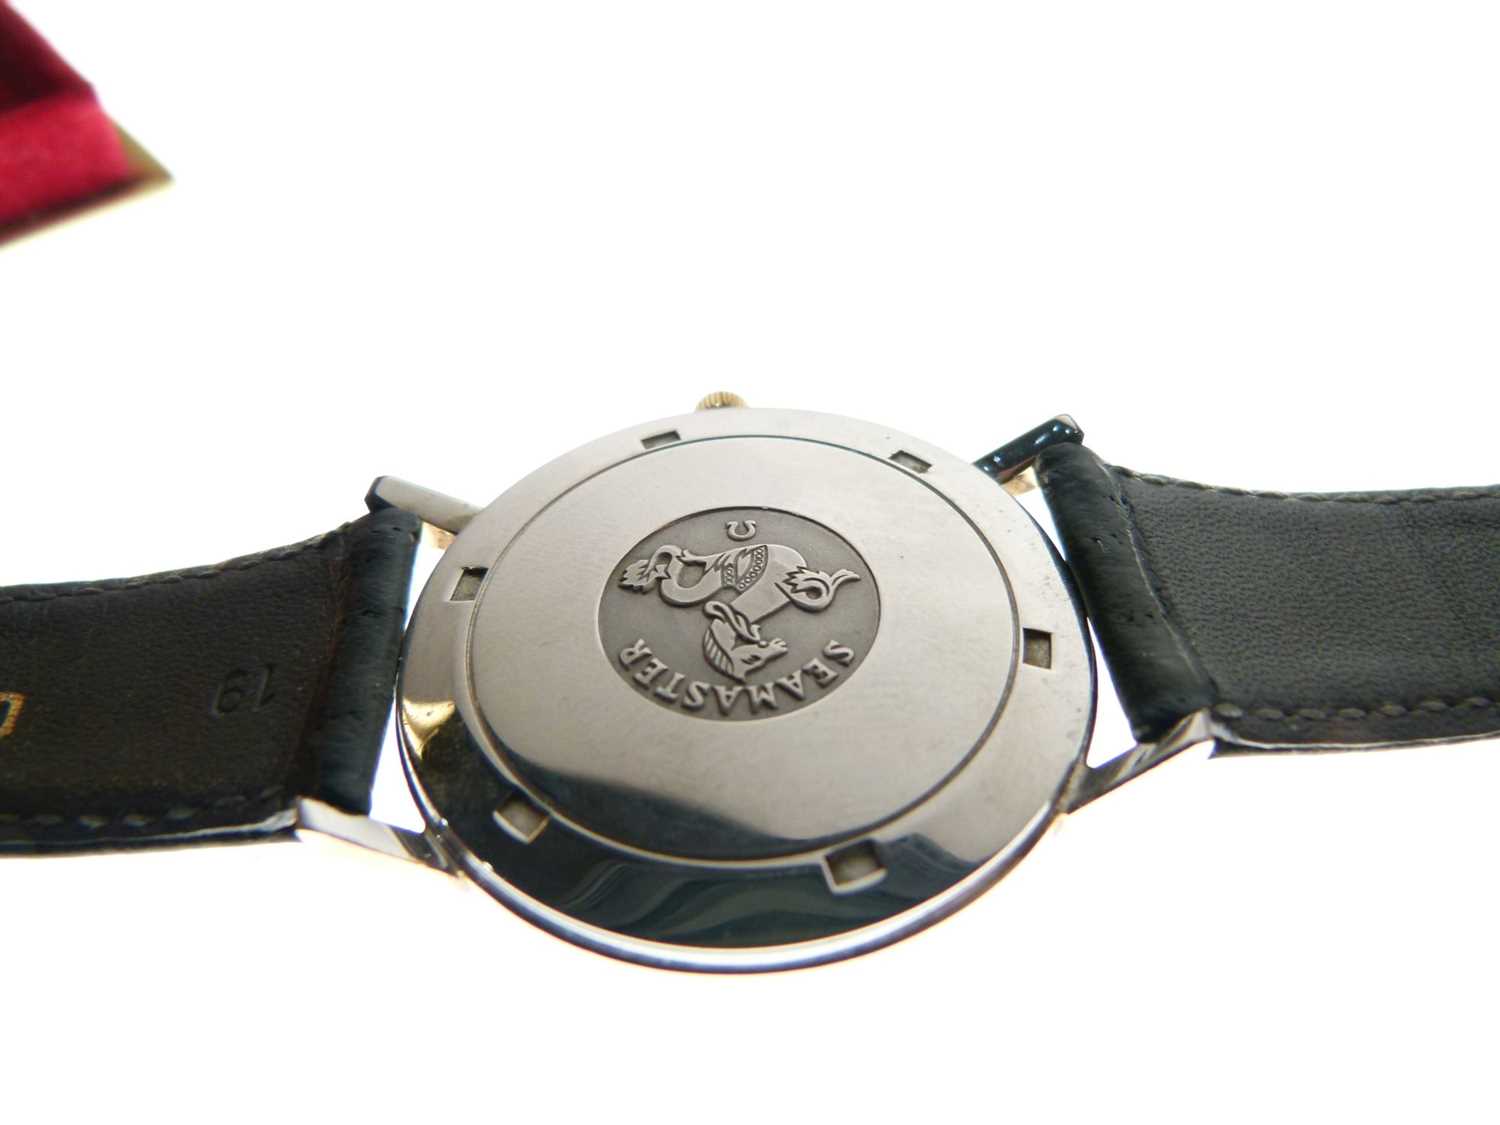 Omega - Gentleman's Automatic De Ville wristwatch - Image 3 of 8